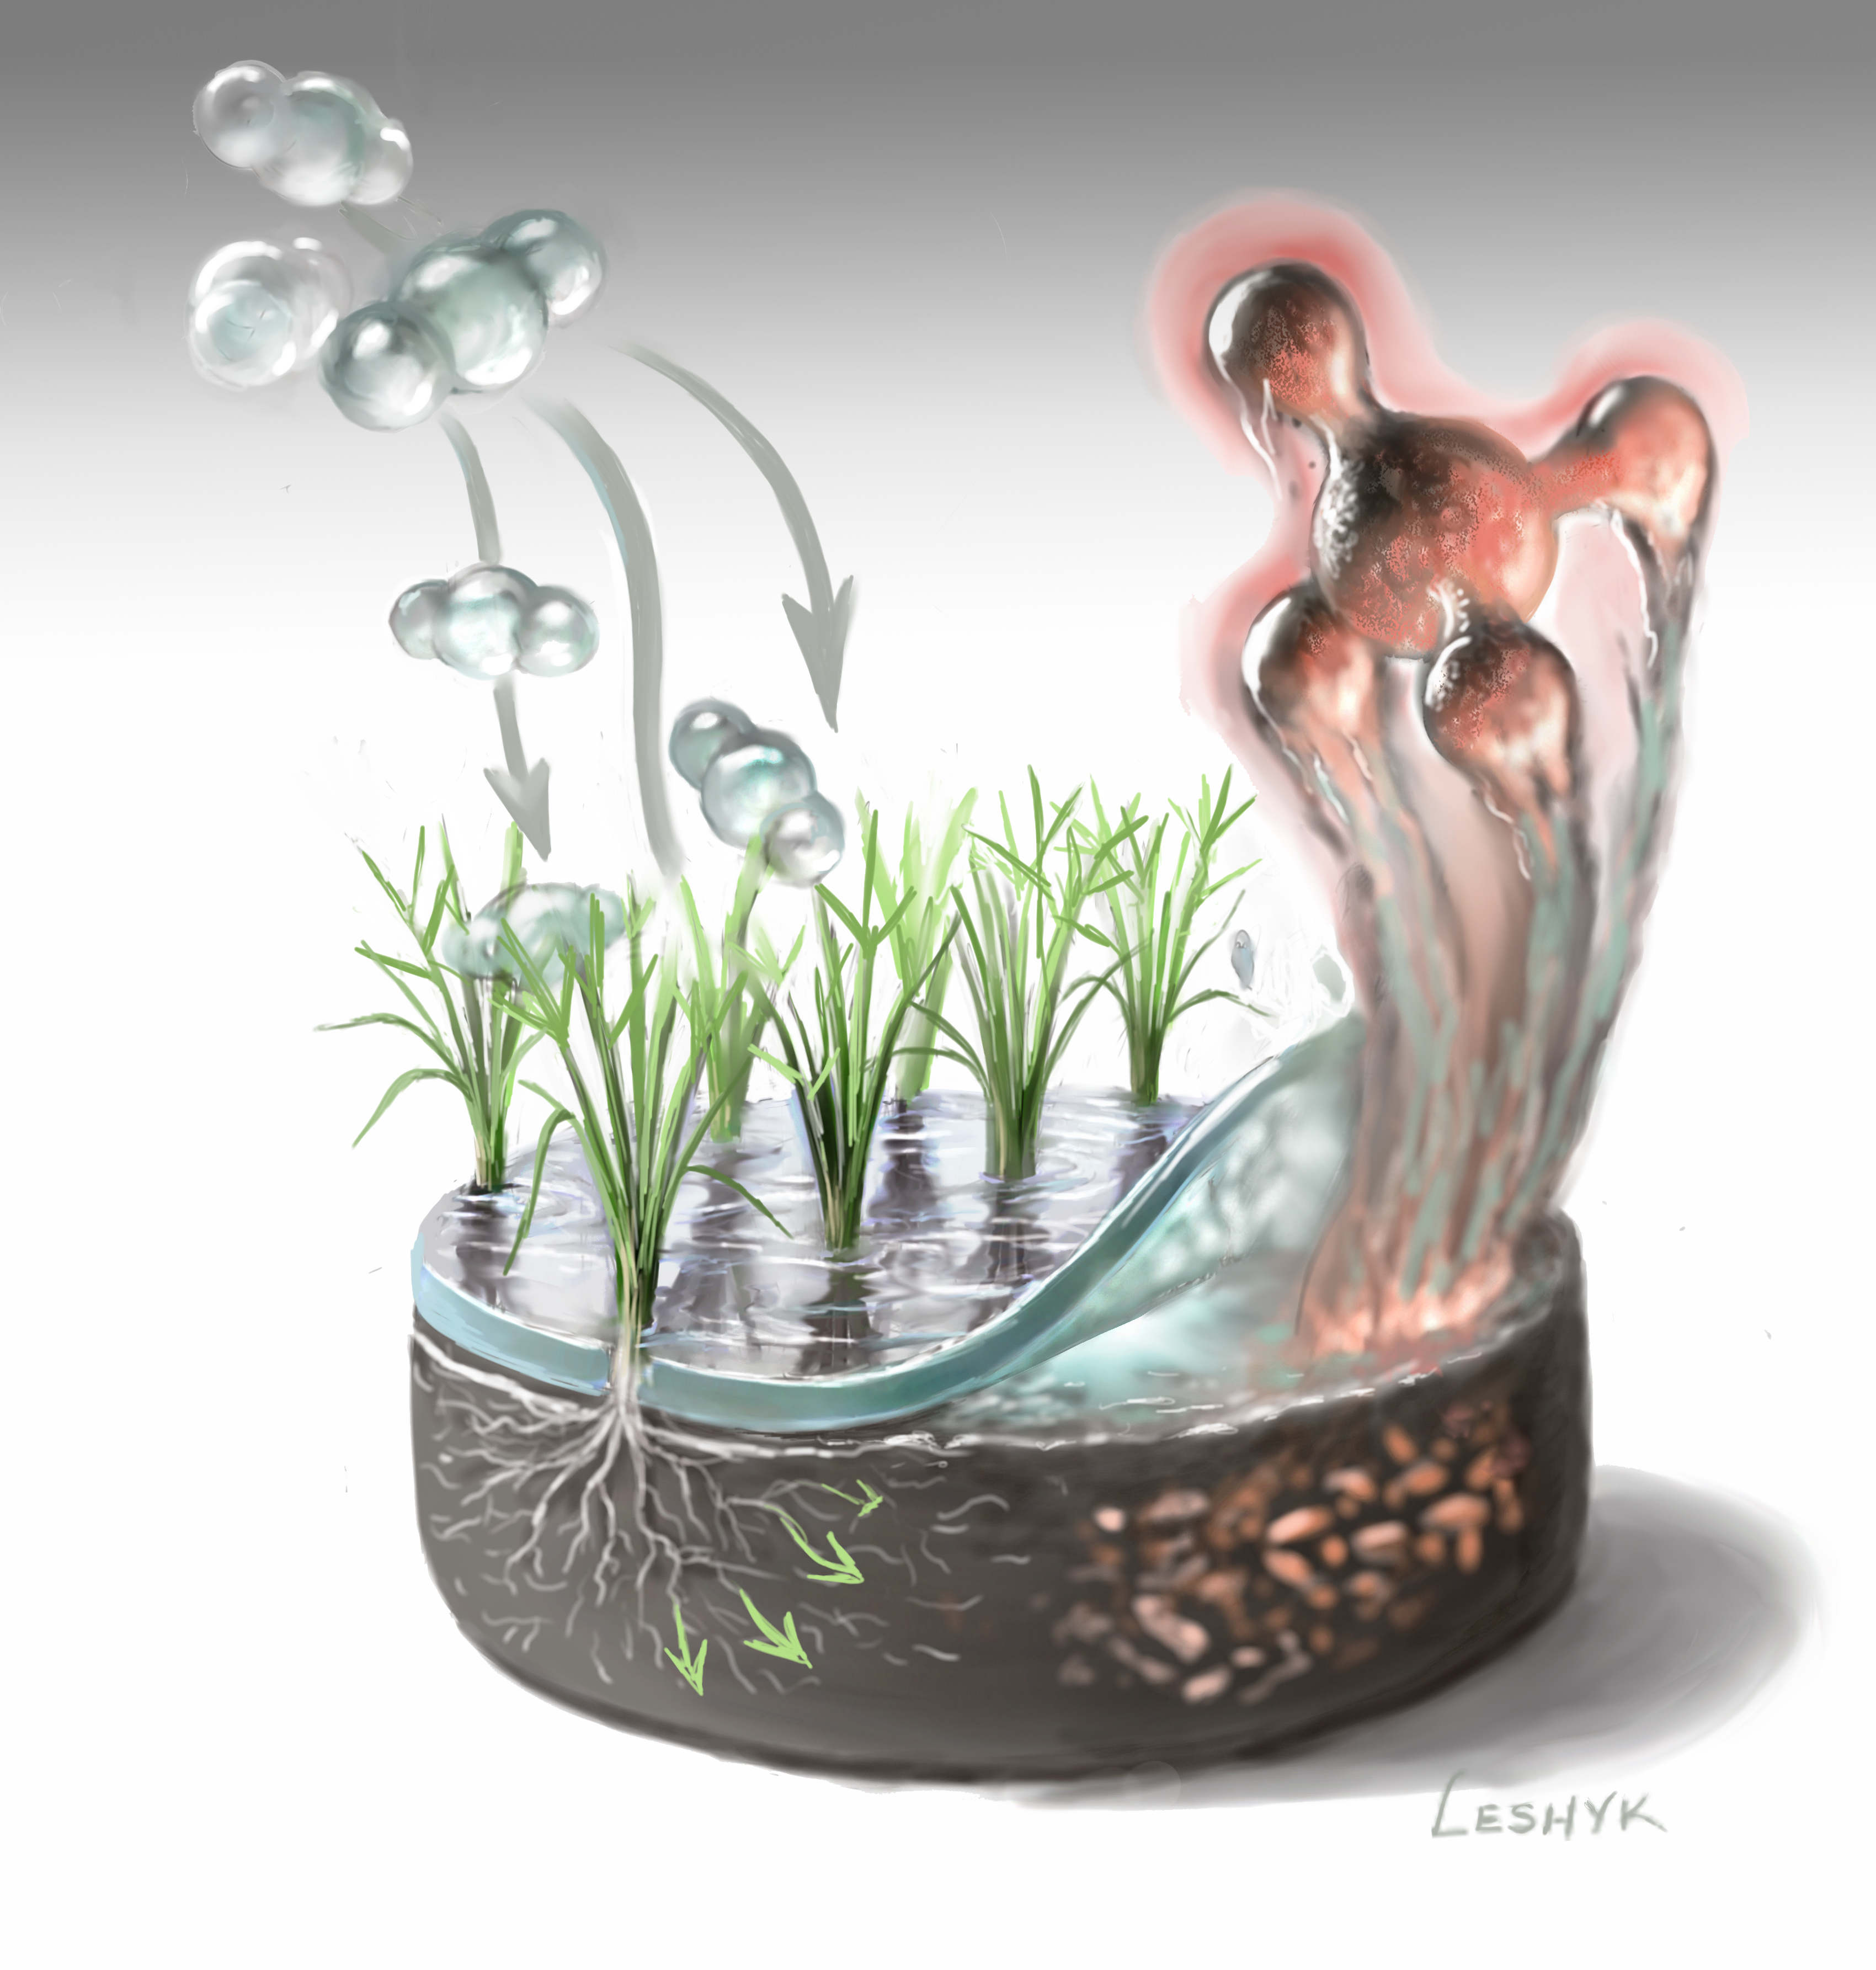 leshyk illustration rice paddy methane